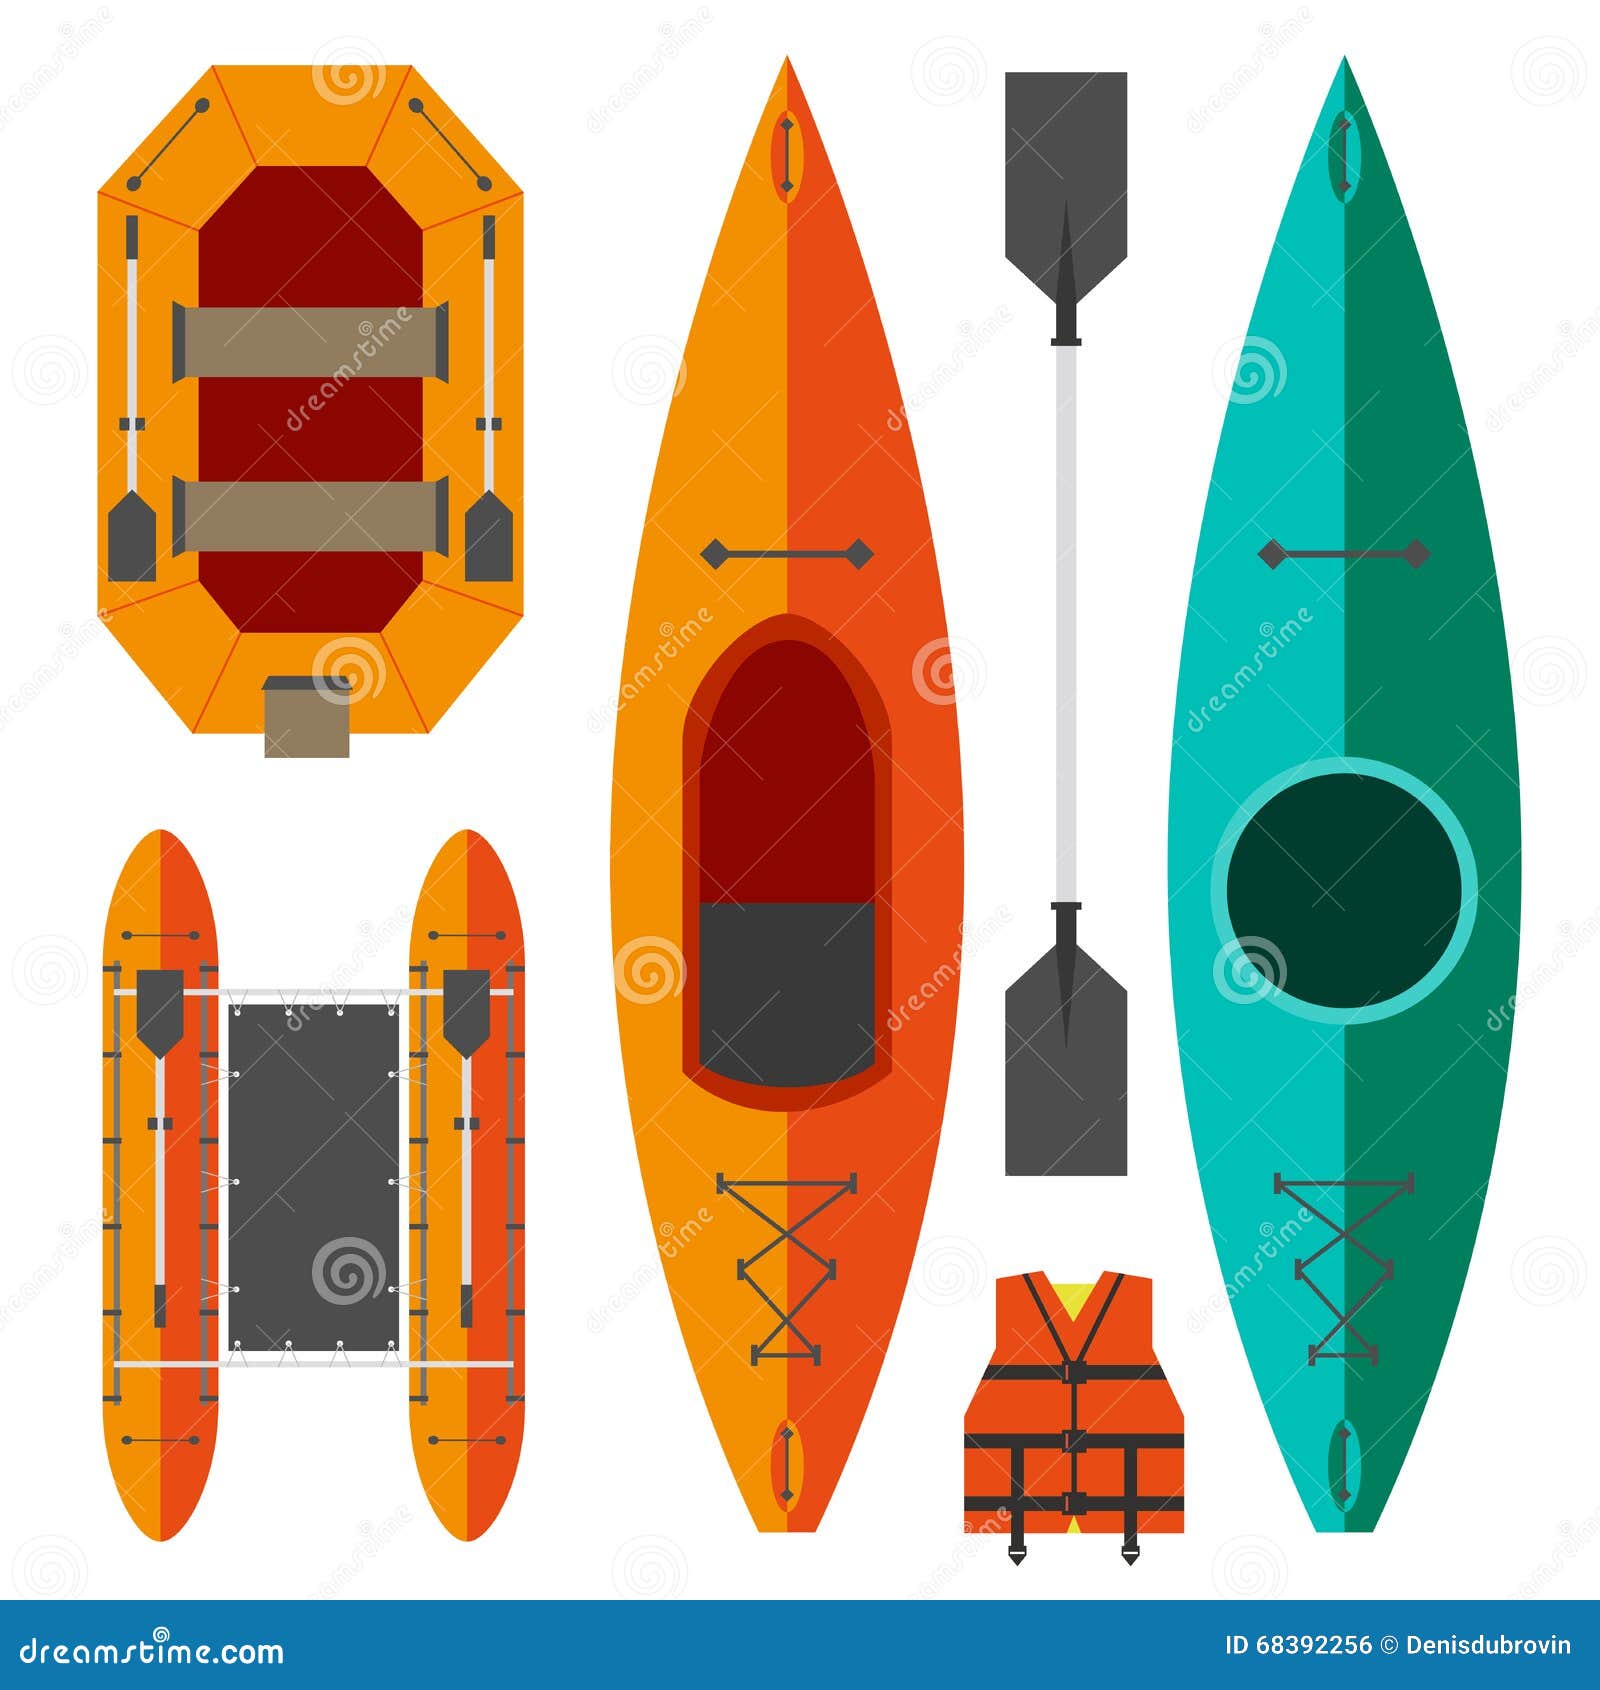 kayak and raft boats